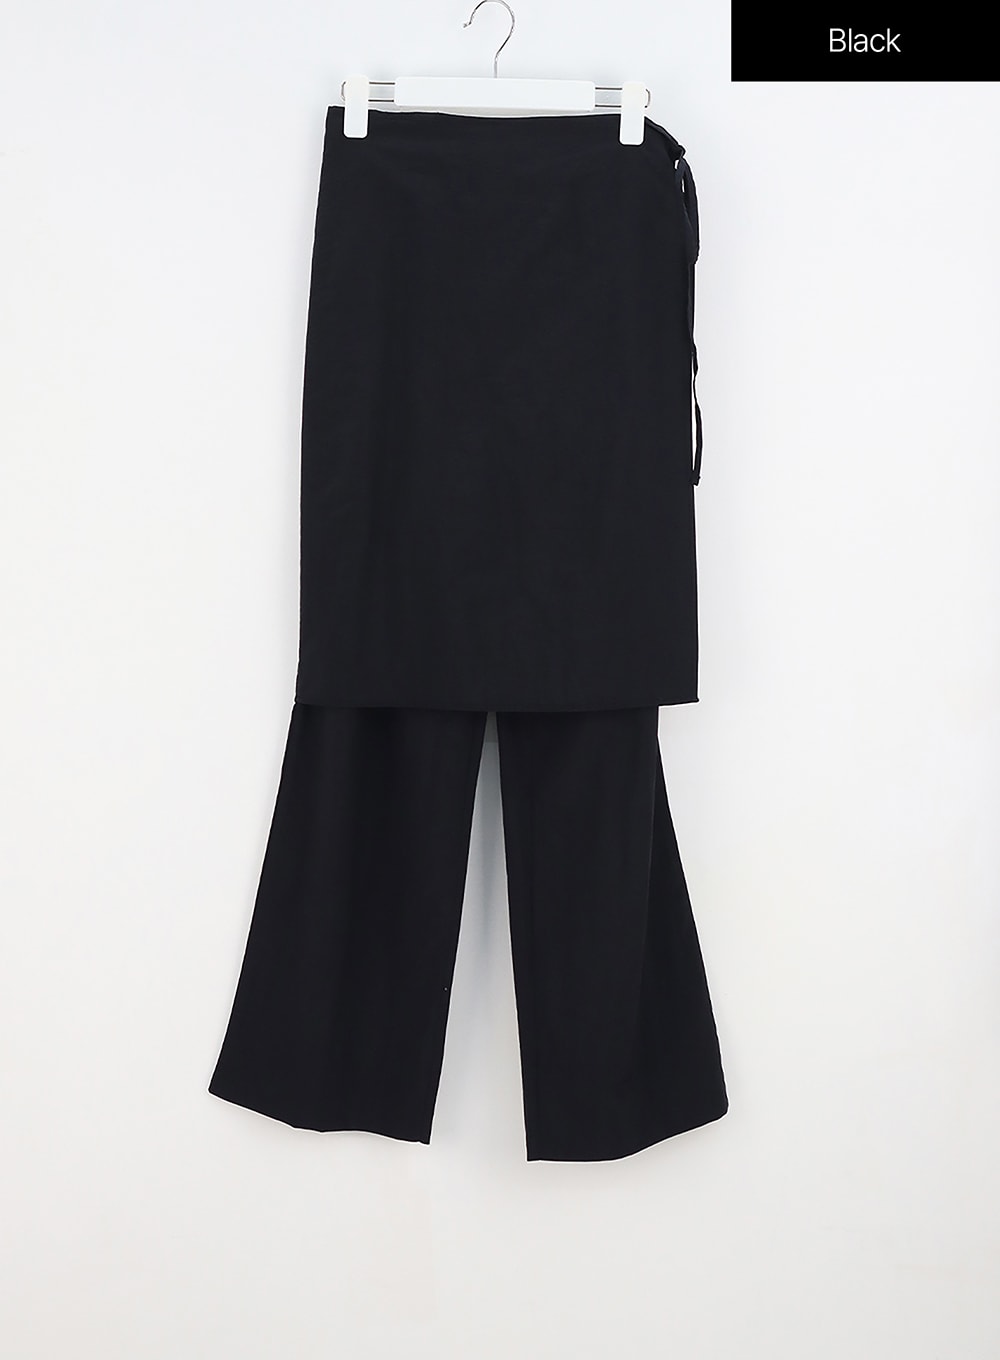 Beaded Lace 2pc Pant Set with Skirt Overlay – Bonita Natural